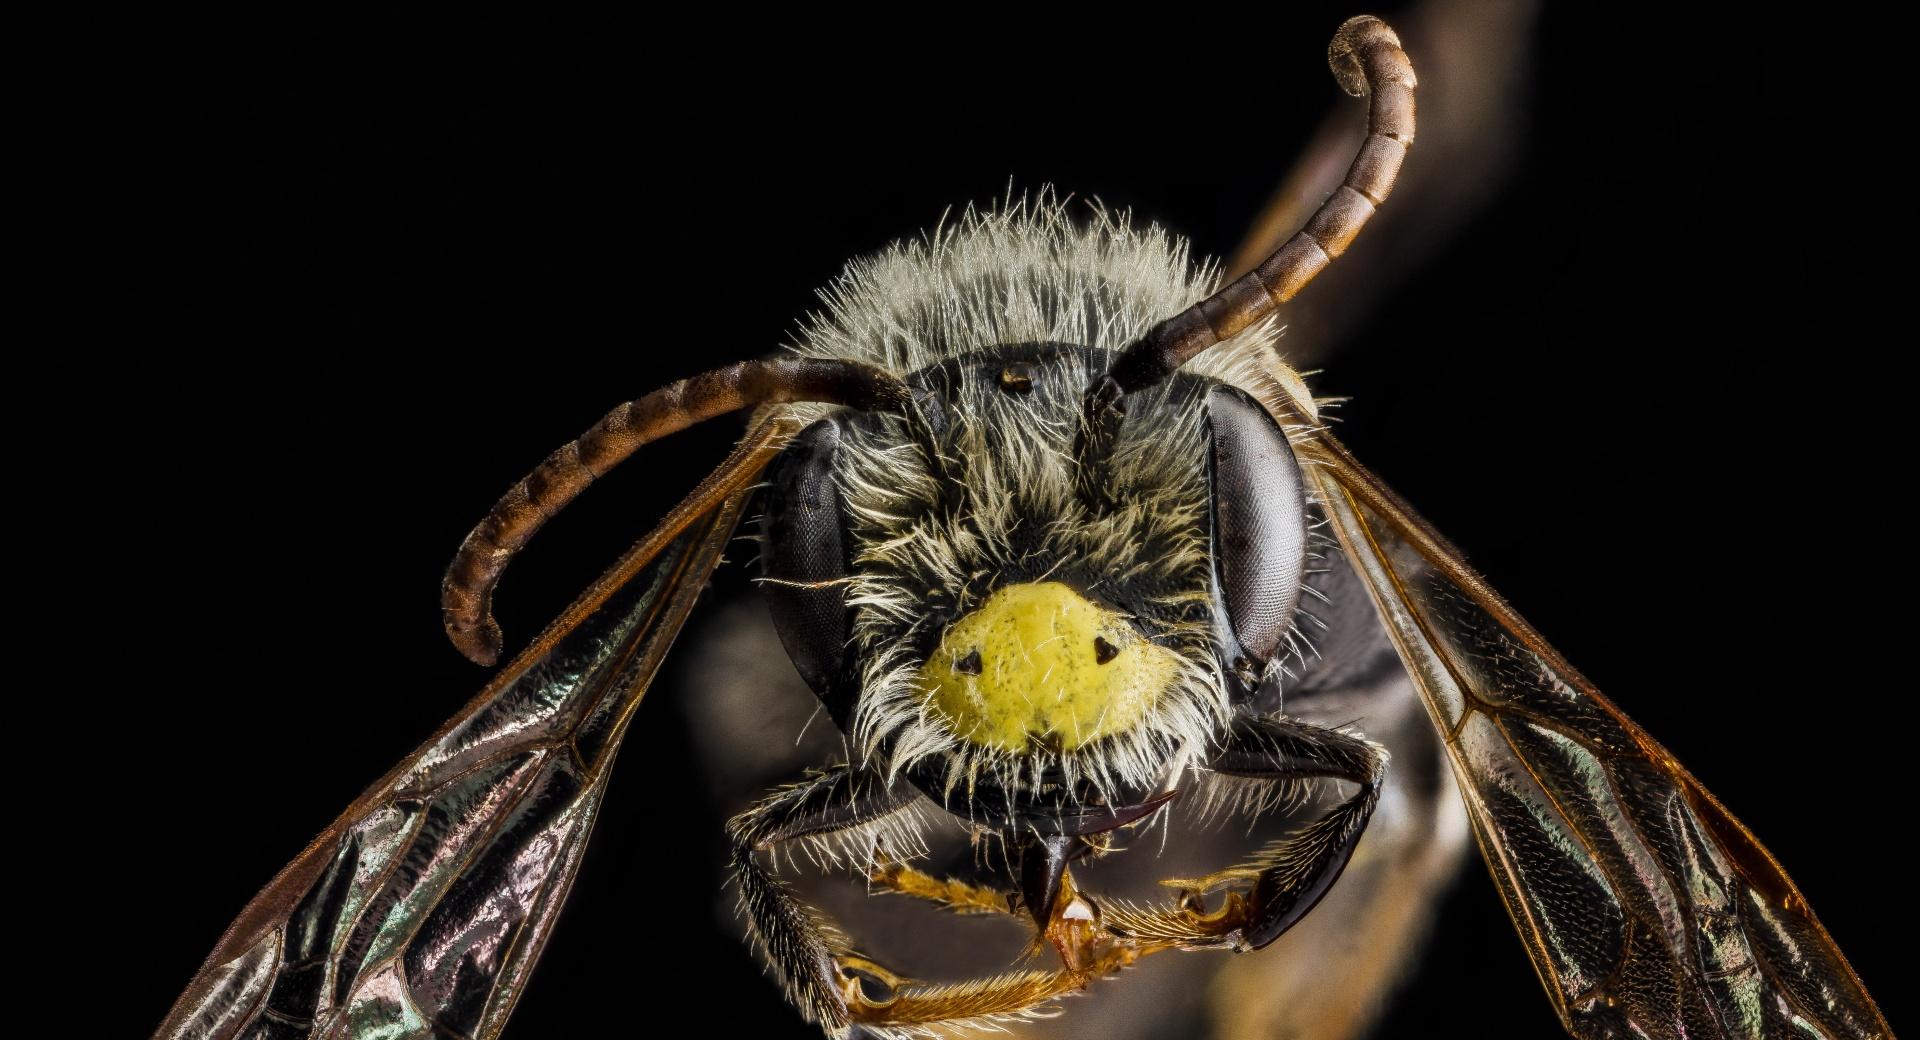 Andrena Banksi Bee Macro at 1280 x 960 size wallpapers HD quality